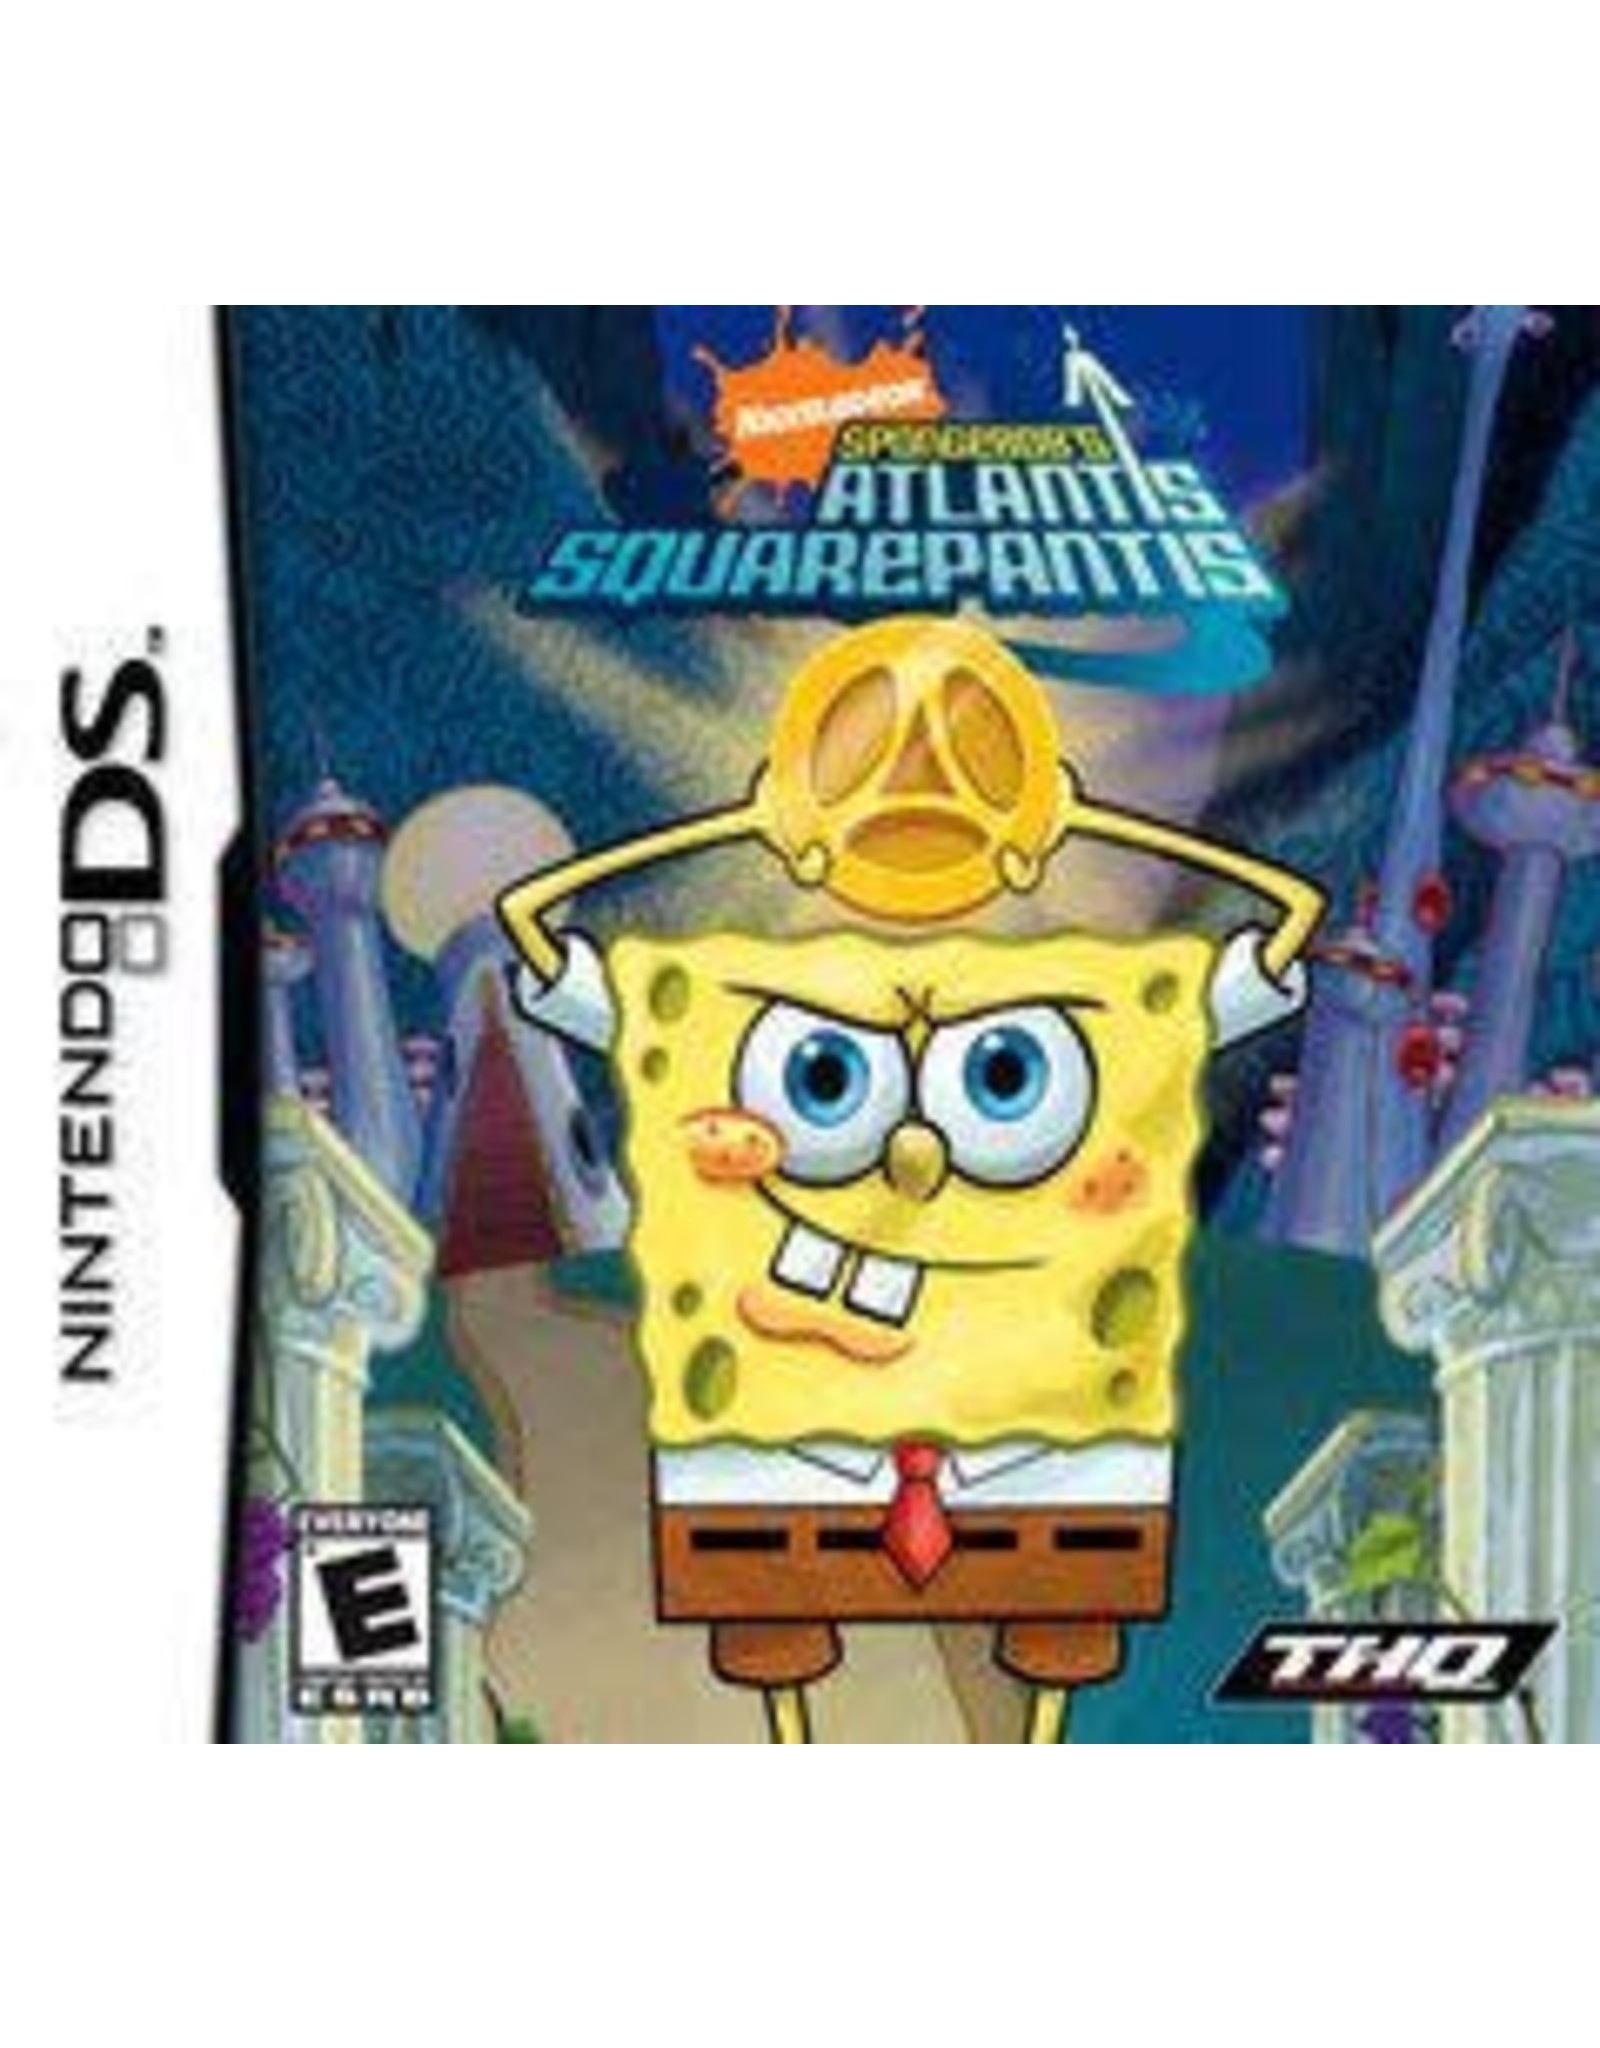 Nintendo DS SpongeBob SquarePants Atlantis SquarePantis (Cart Only)